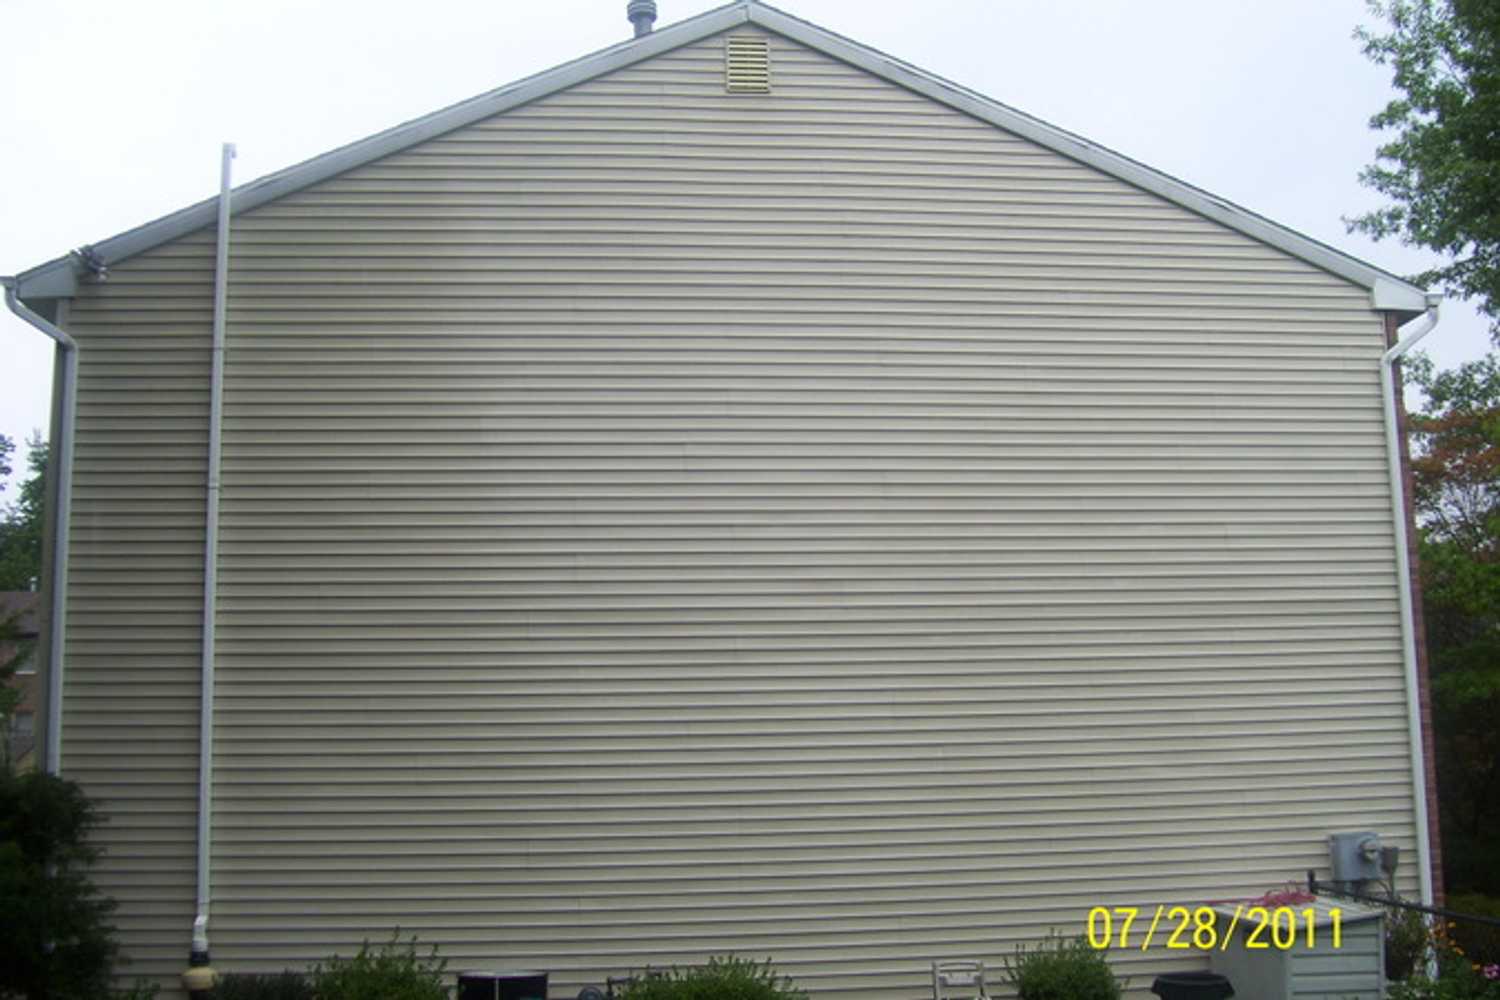 House Painting Company | Power Washing Company | Roof Shingle Cleaning Berks County PA